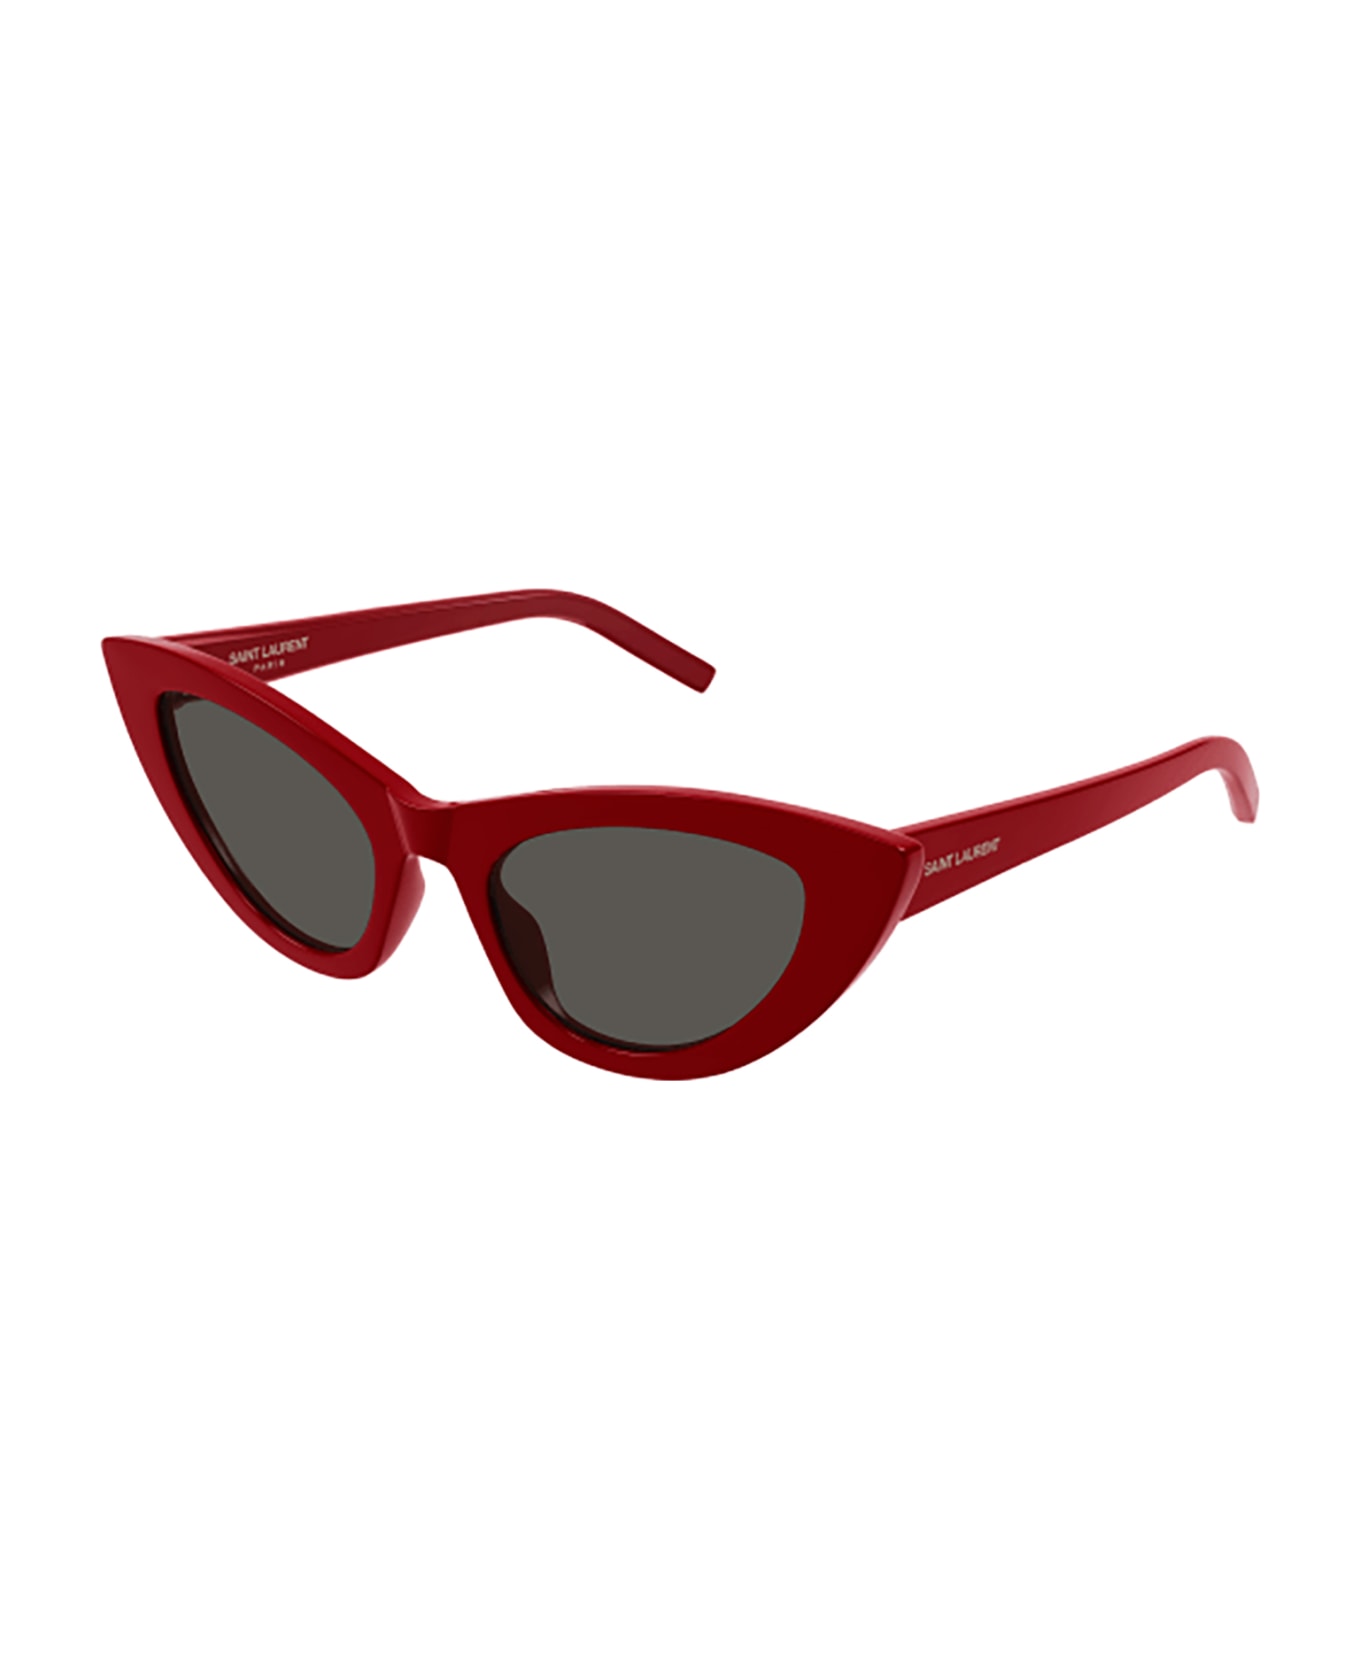 Saint Laurent Eyewear SL 213 LILY Sunglasses - Red Red Grey